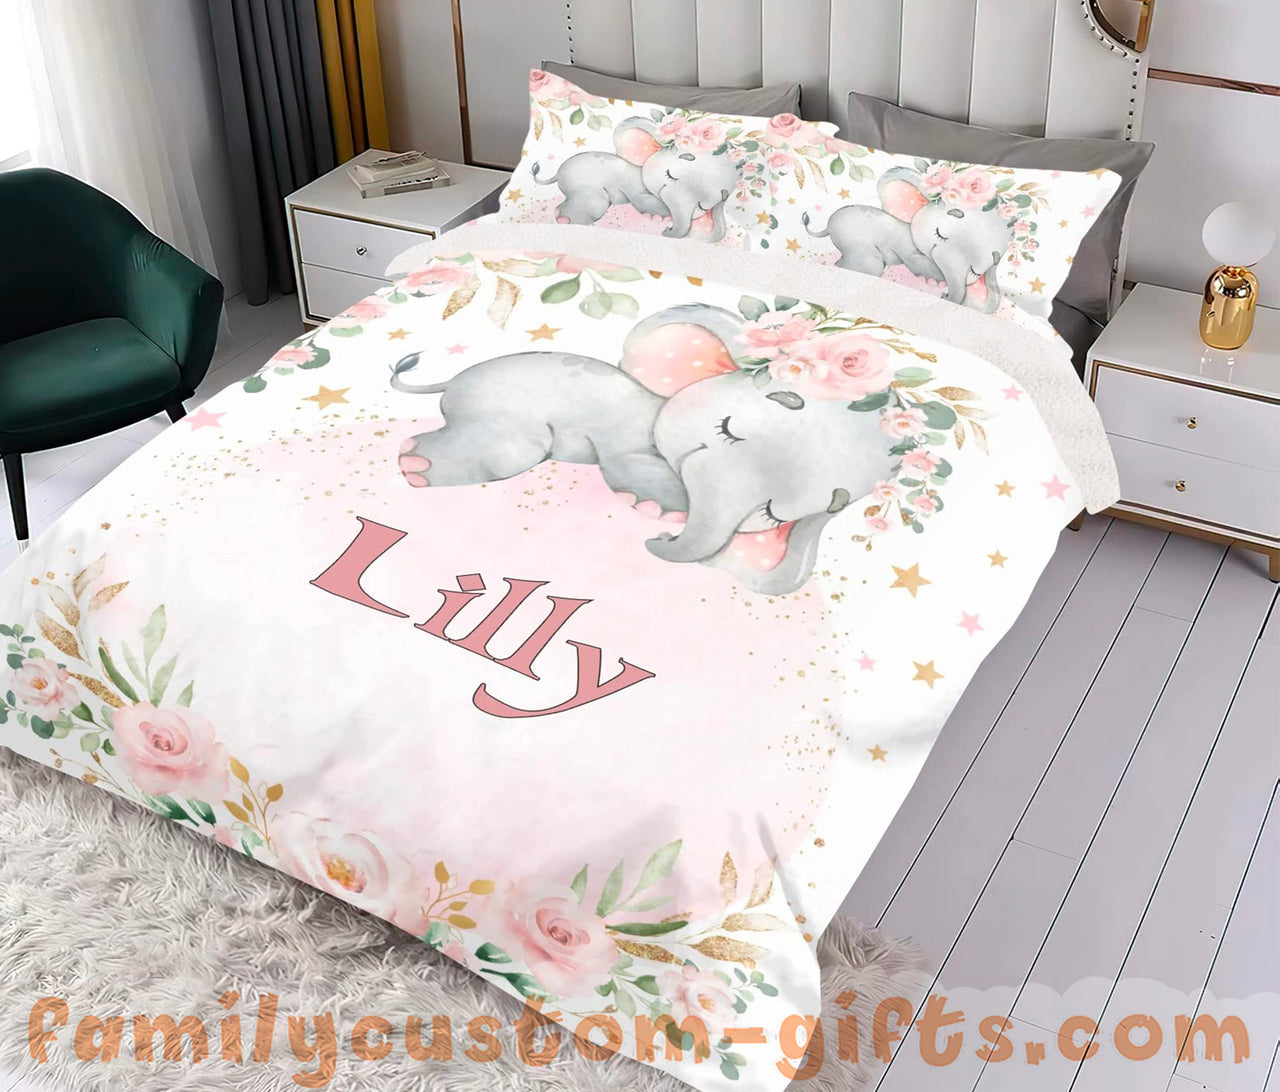 Custom Quilt Sets Cute Elephant Flowers Premium Quilt Bedding for Boys Girls Men Women